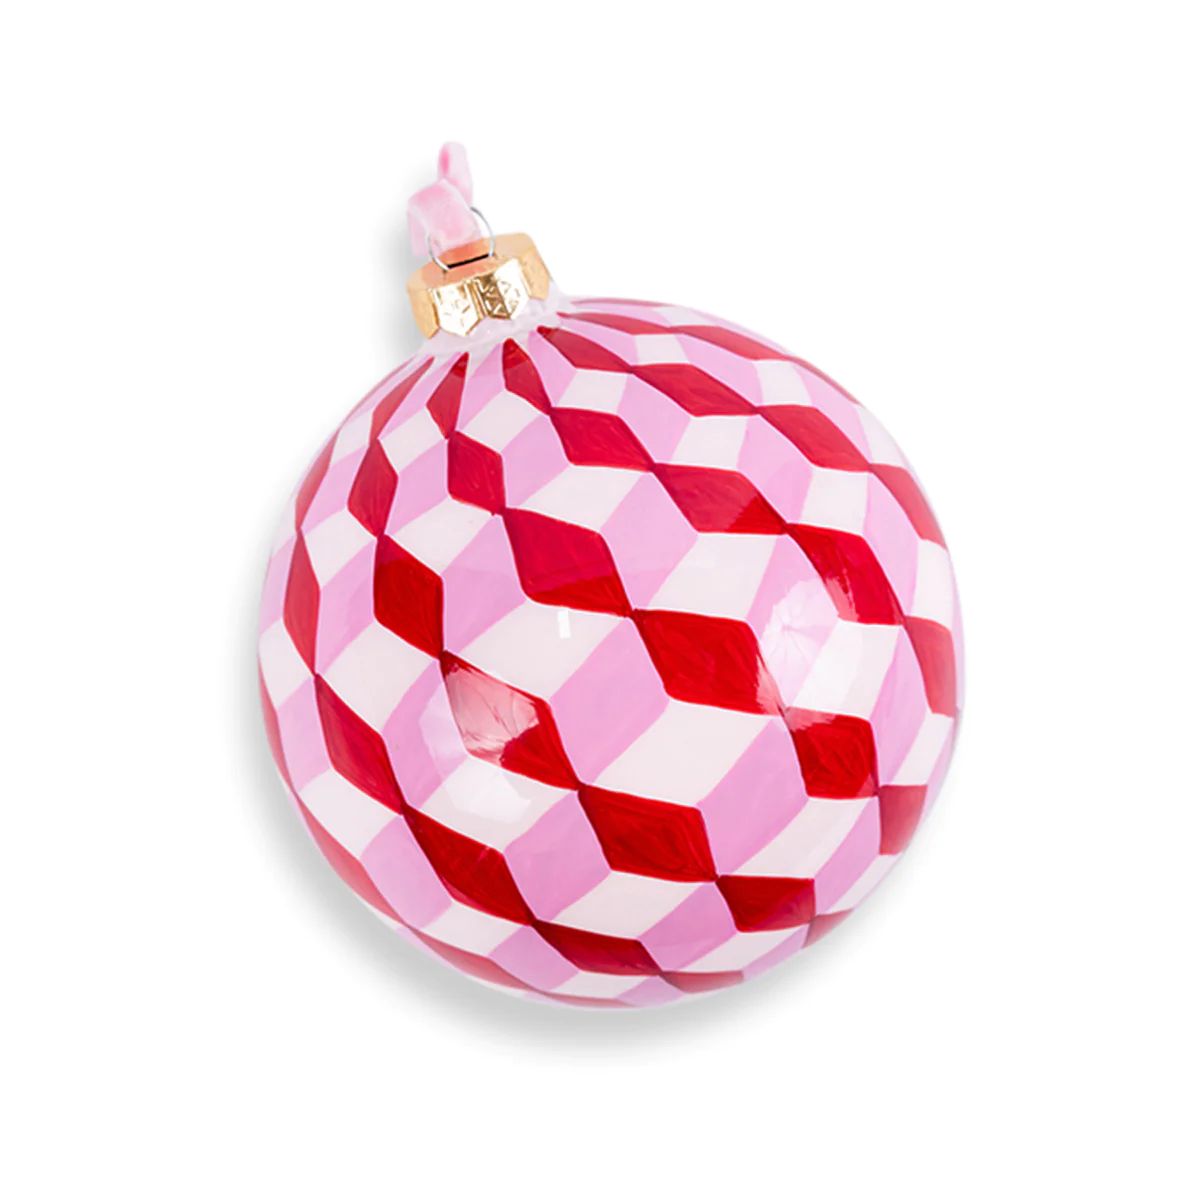 Checkered Bauble Ornament - Pink | Furbish Studio